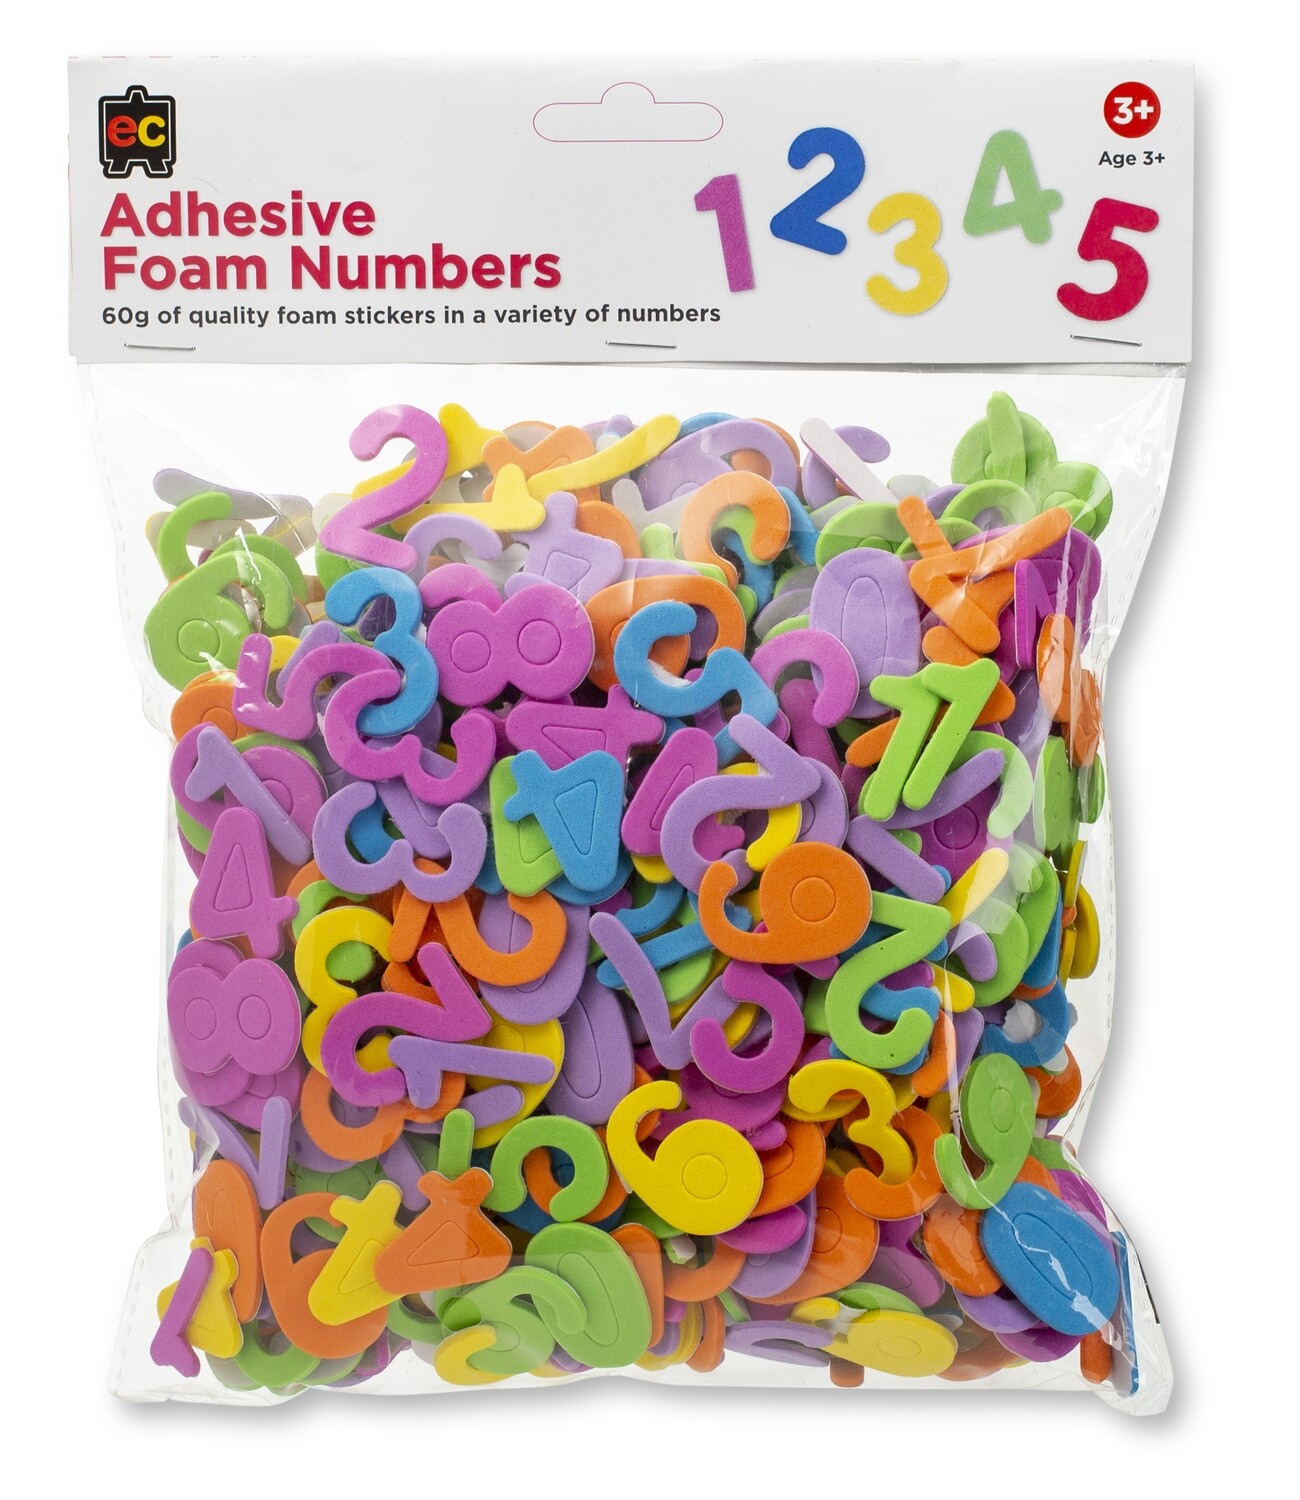 Adhesive Foam Numbers 60g